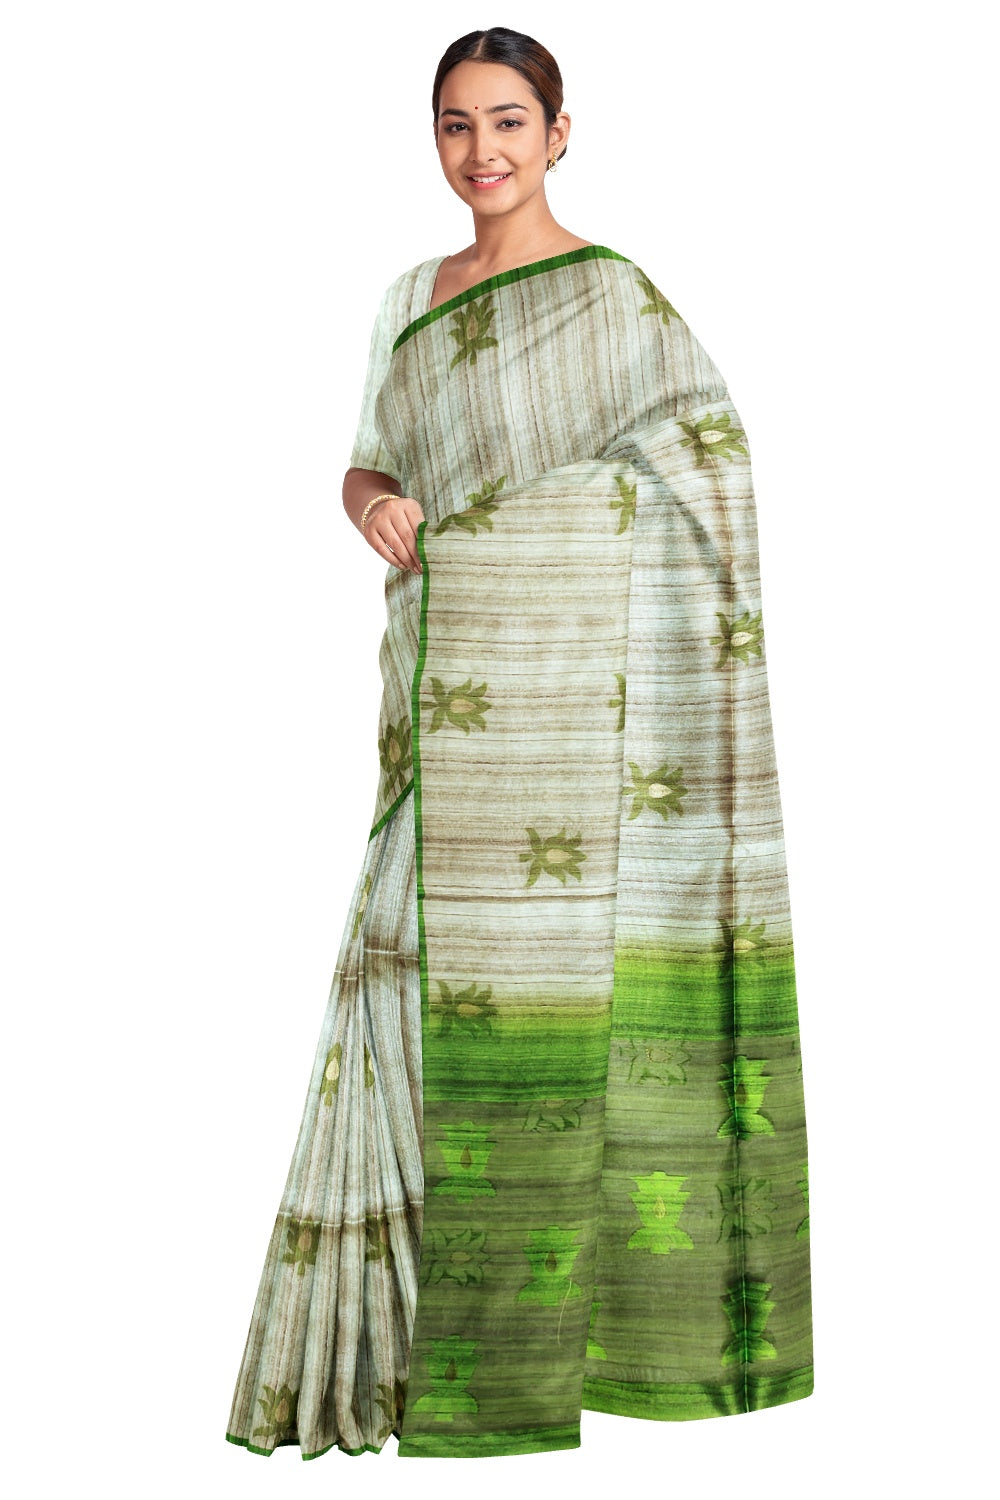 Southloom Semi Tussar Beige Designer Saree with Light Green Organza Design Pallu